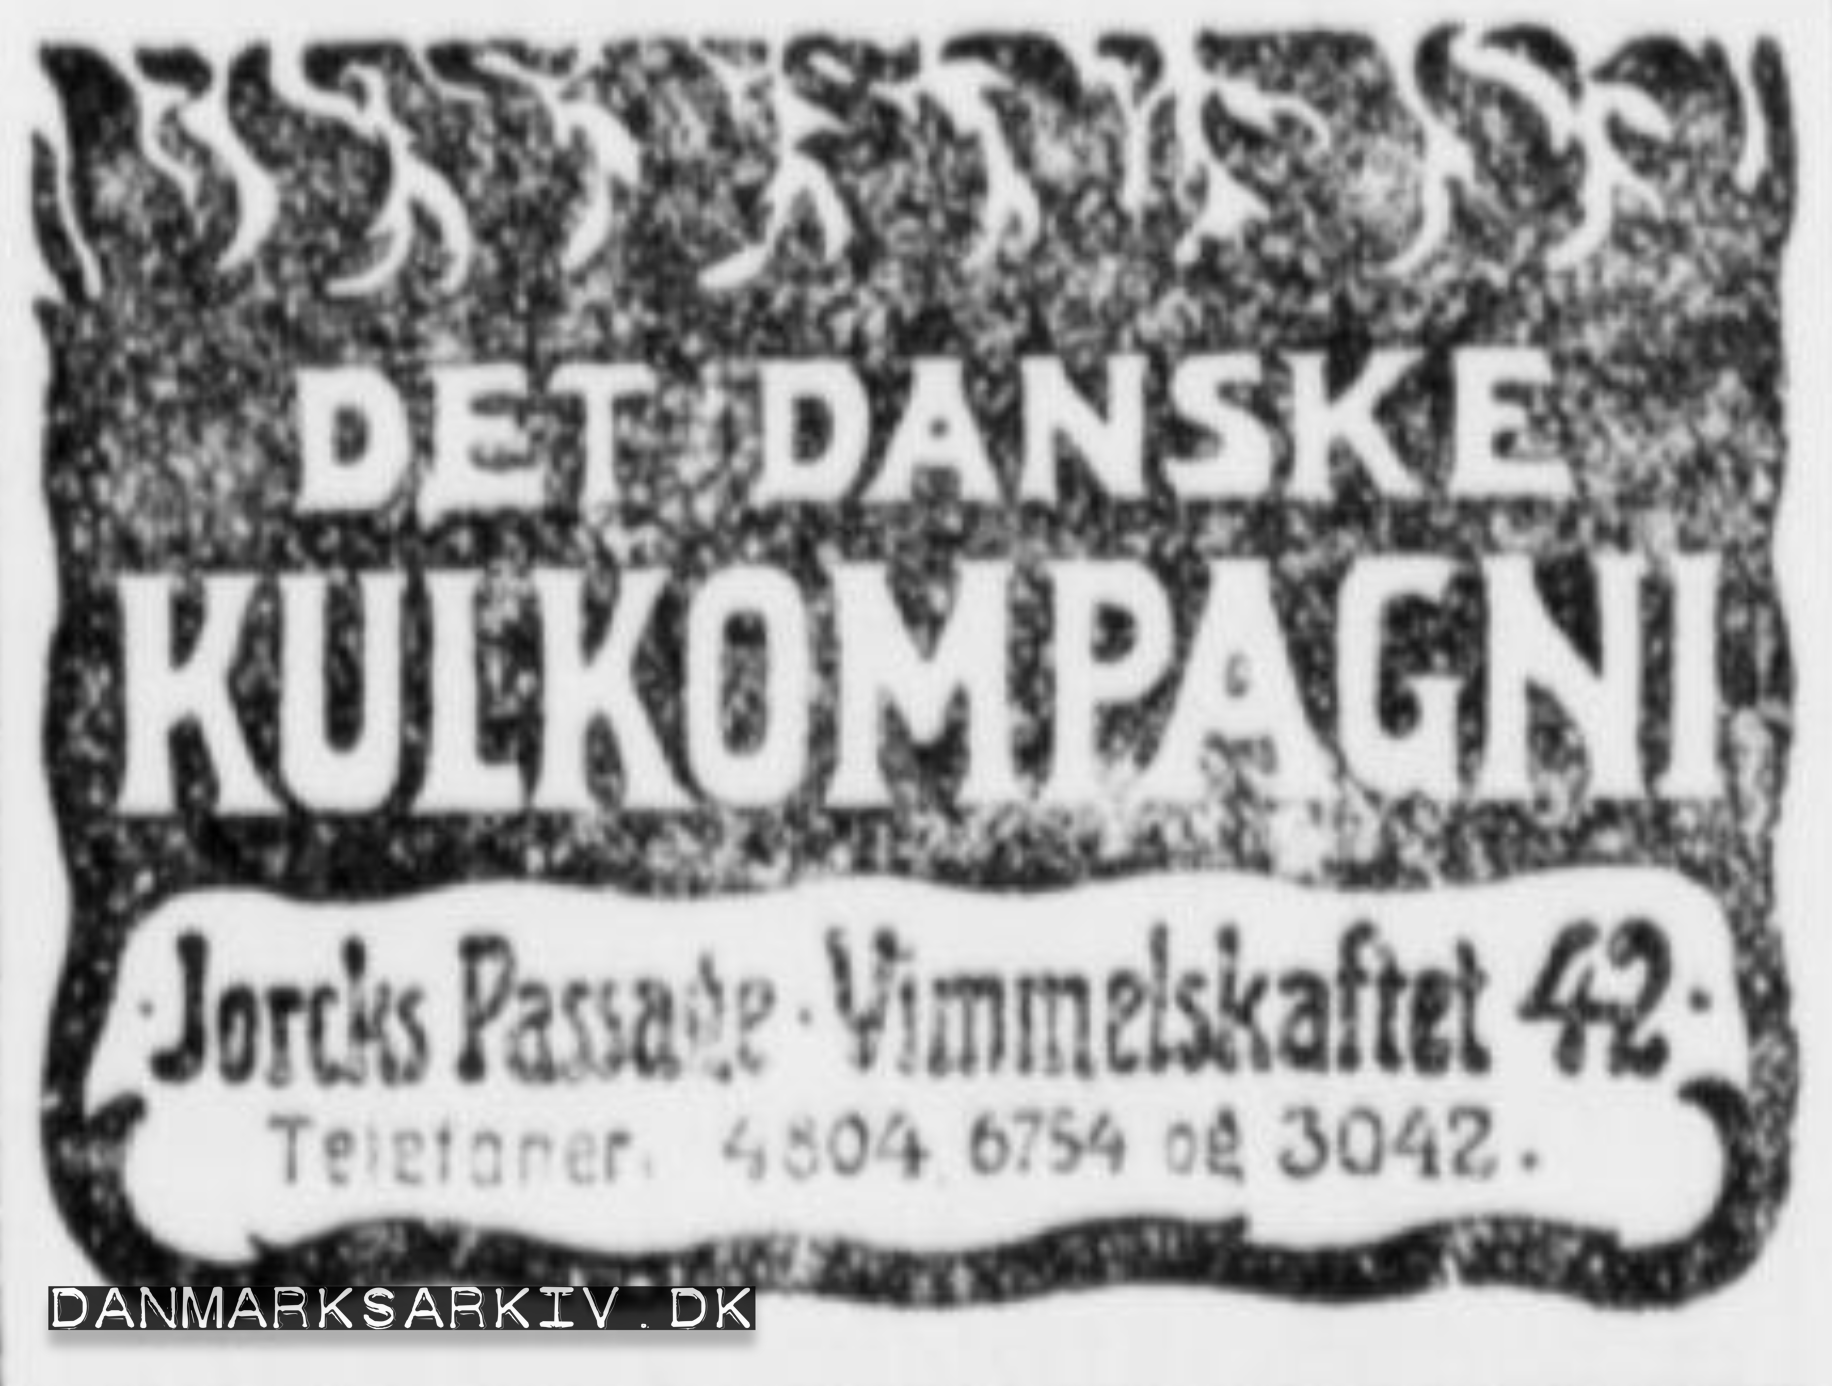 Det Danske Kulkompagni - Jorcks Passage - 1907